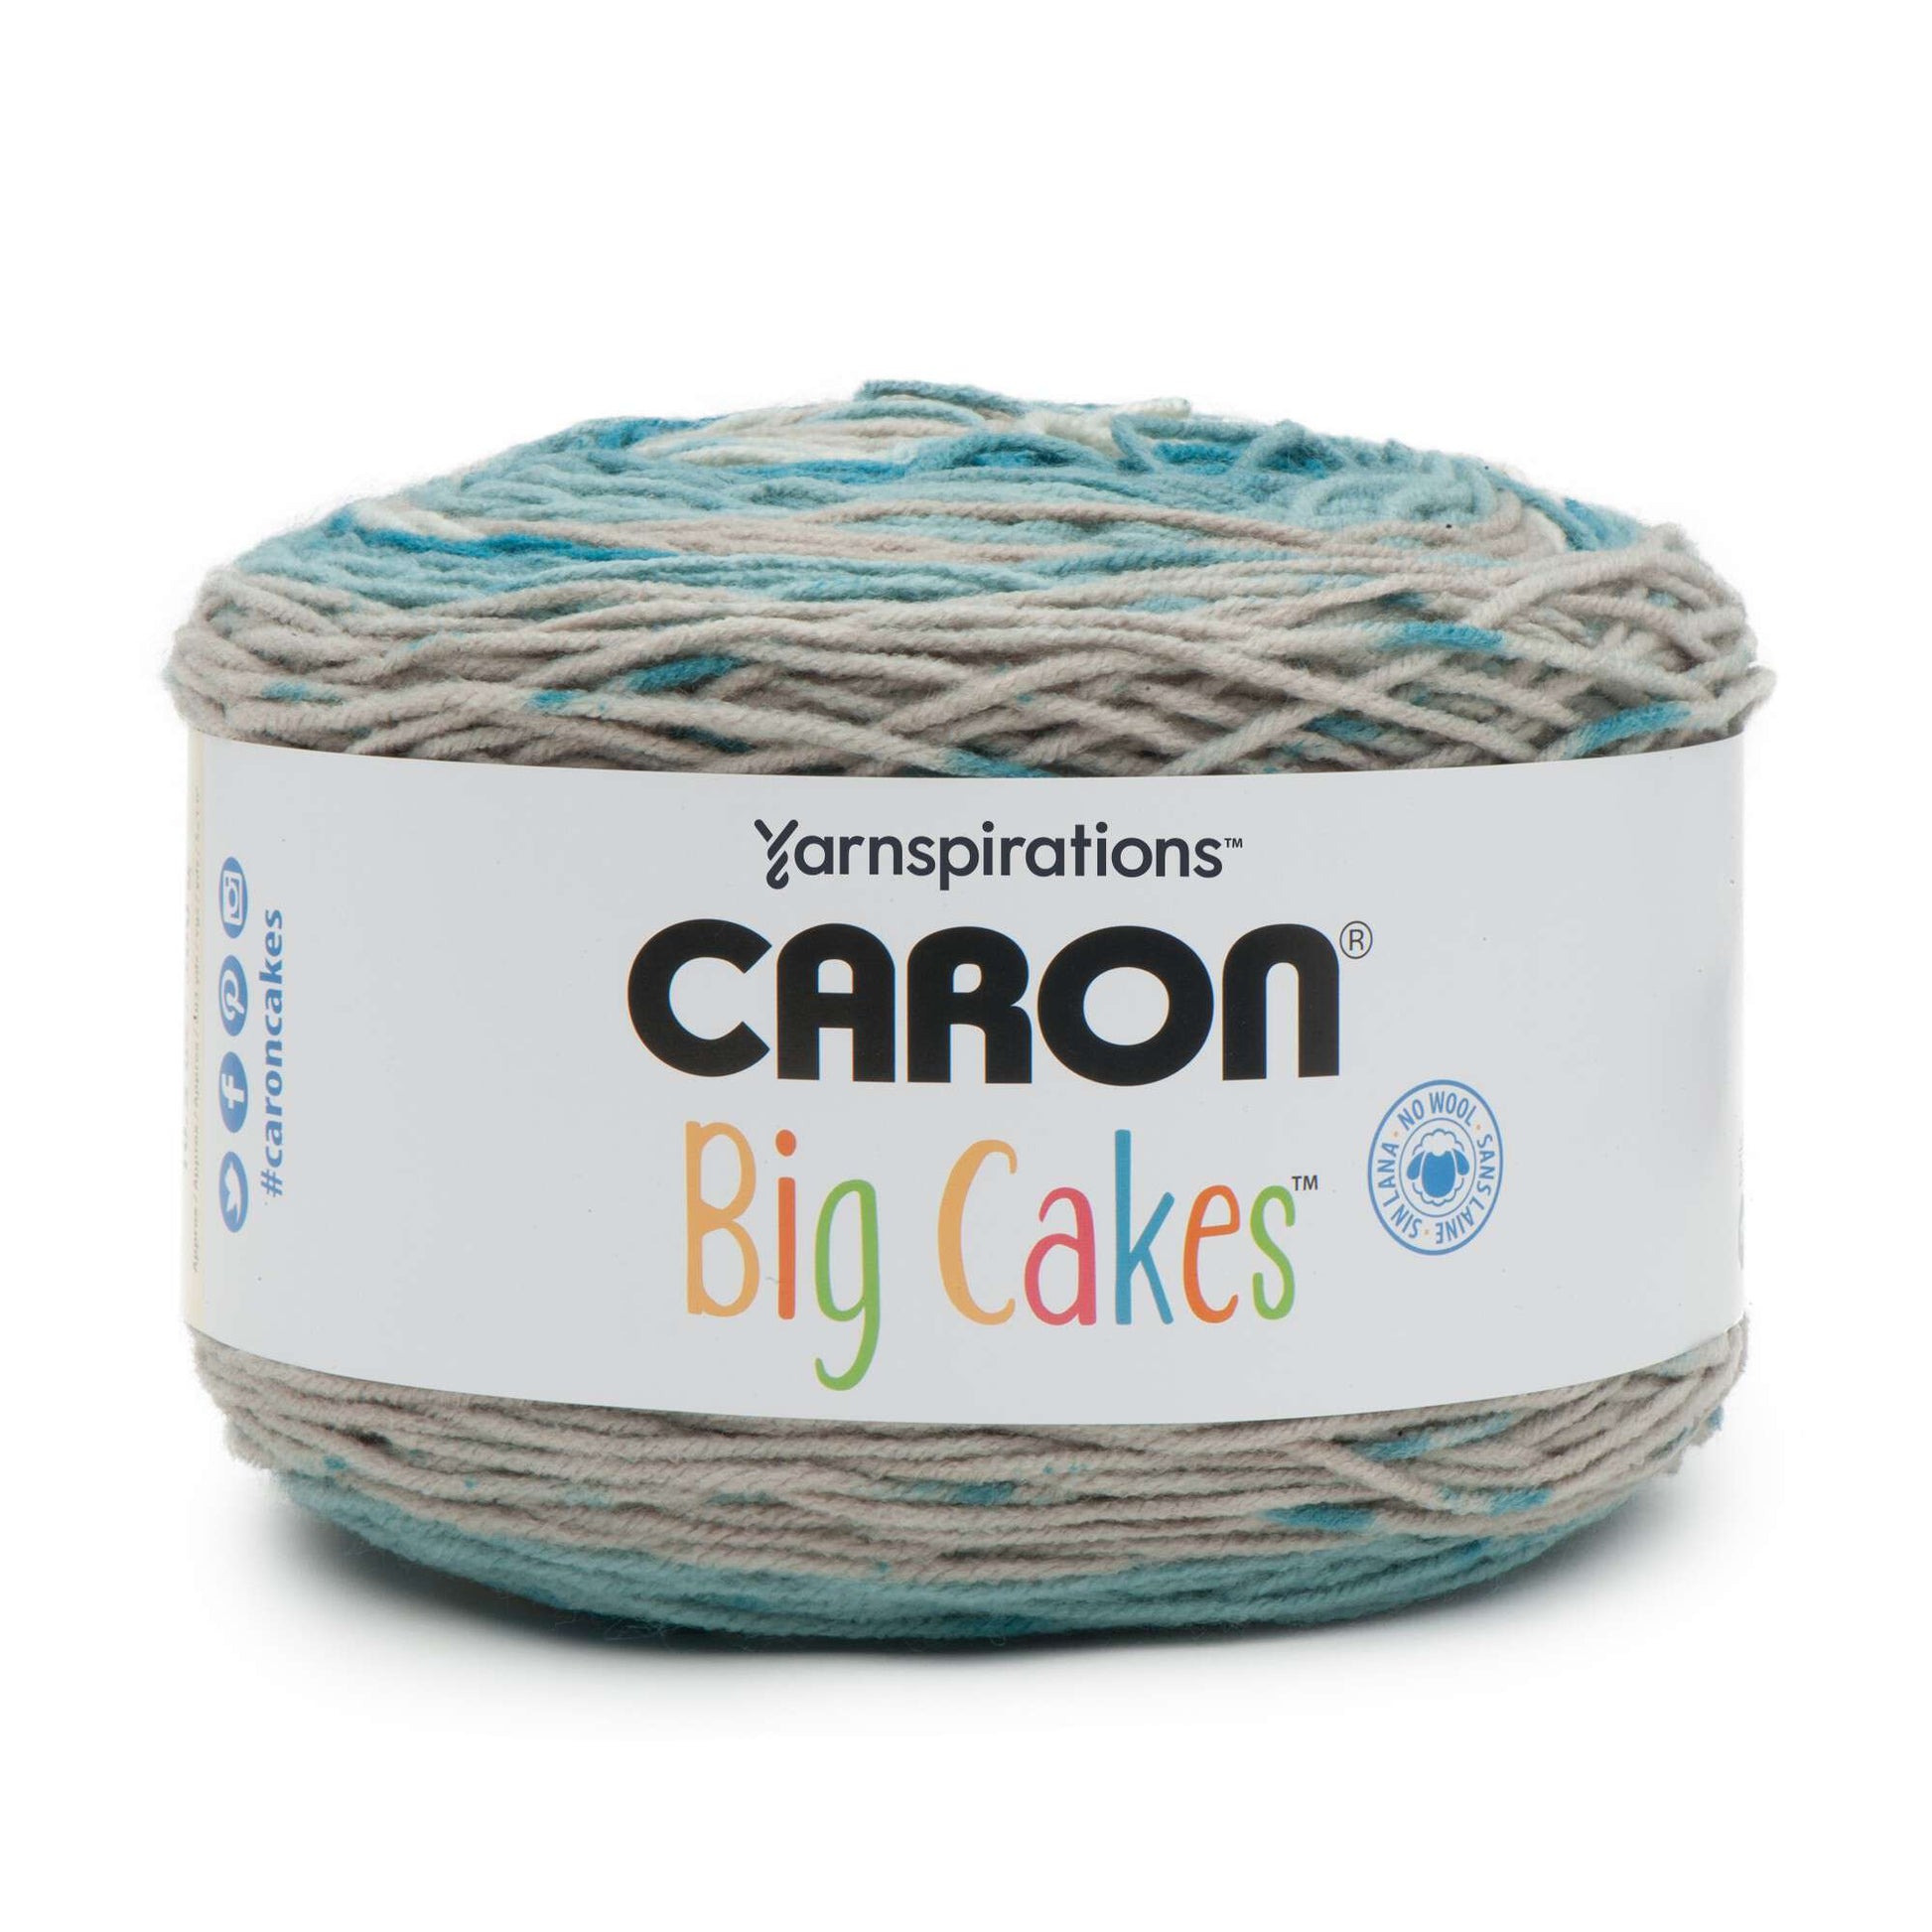 Caron Big Cakes Yarn - Clearance Shades